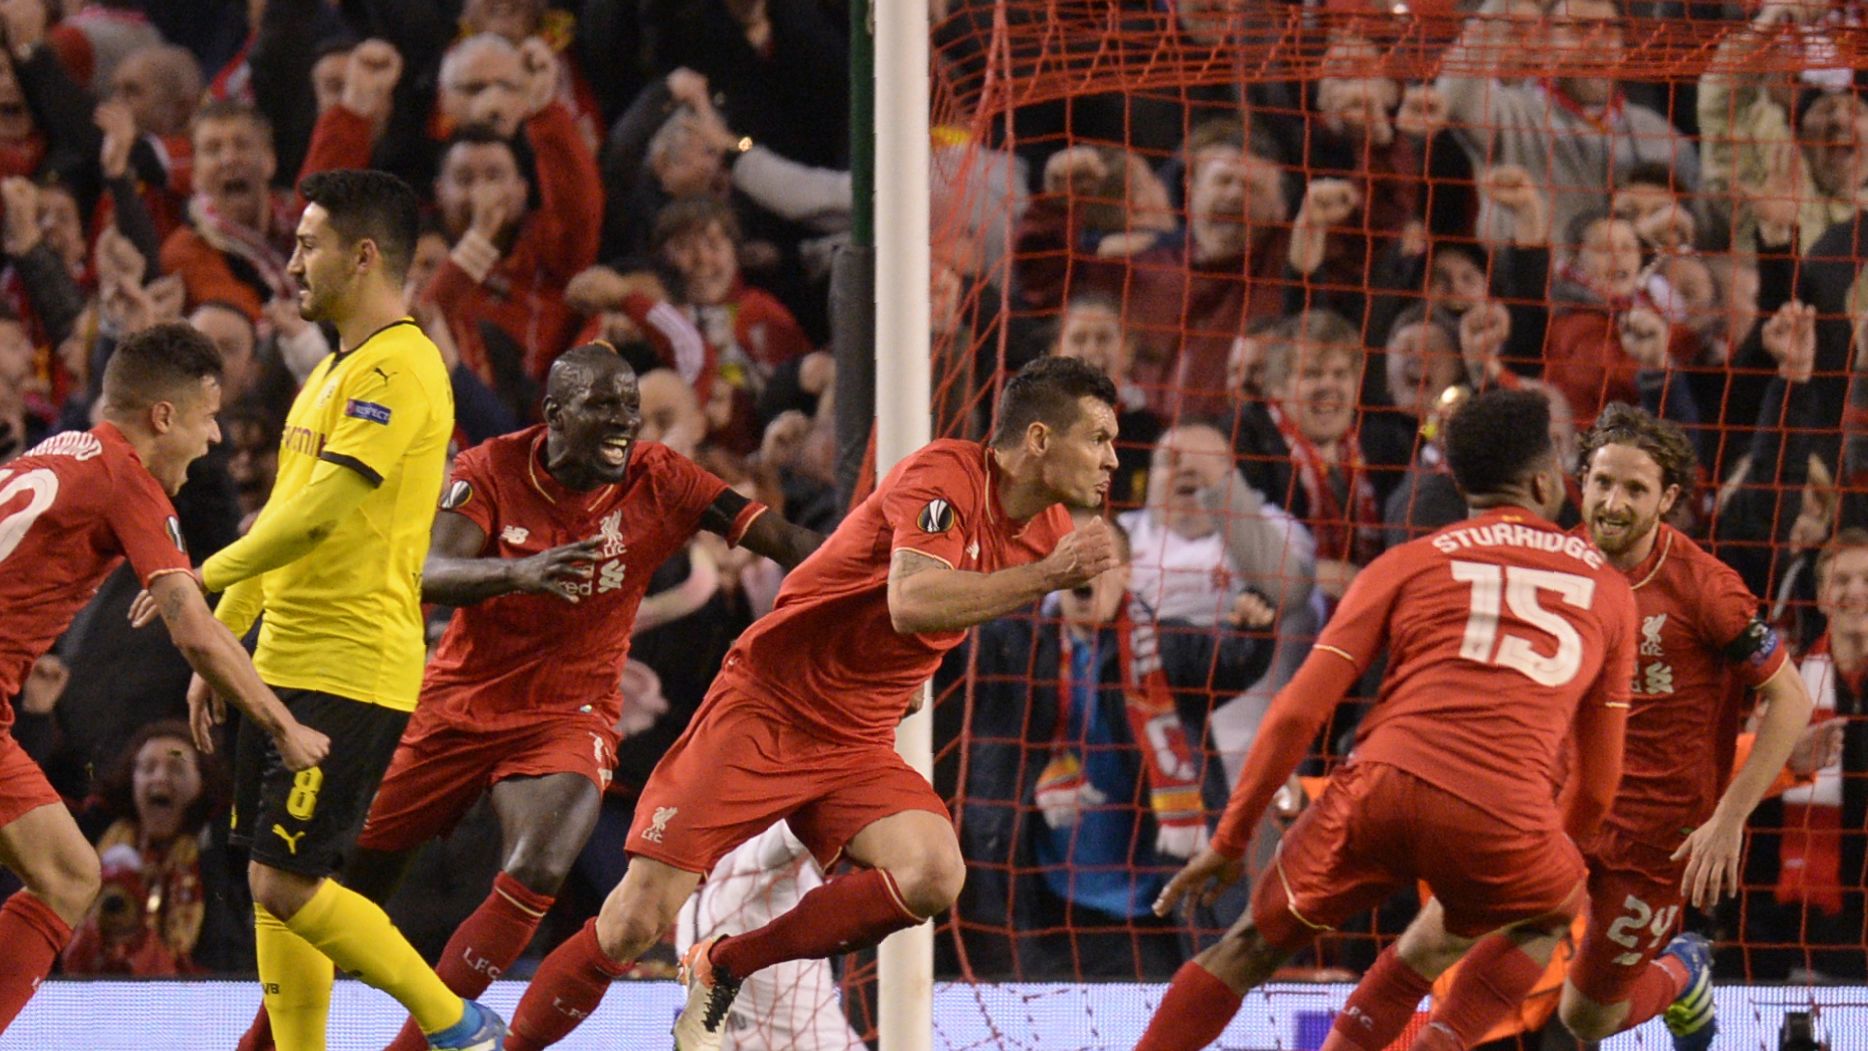 Dejan Lovren celebrates after scoring a late winning goal for Liverpool.